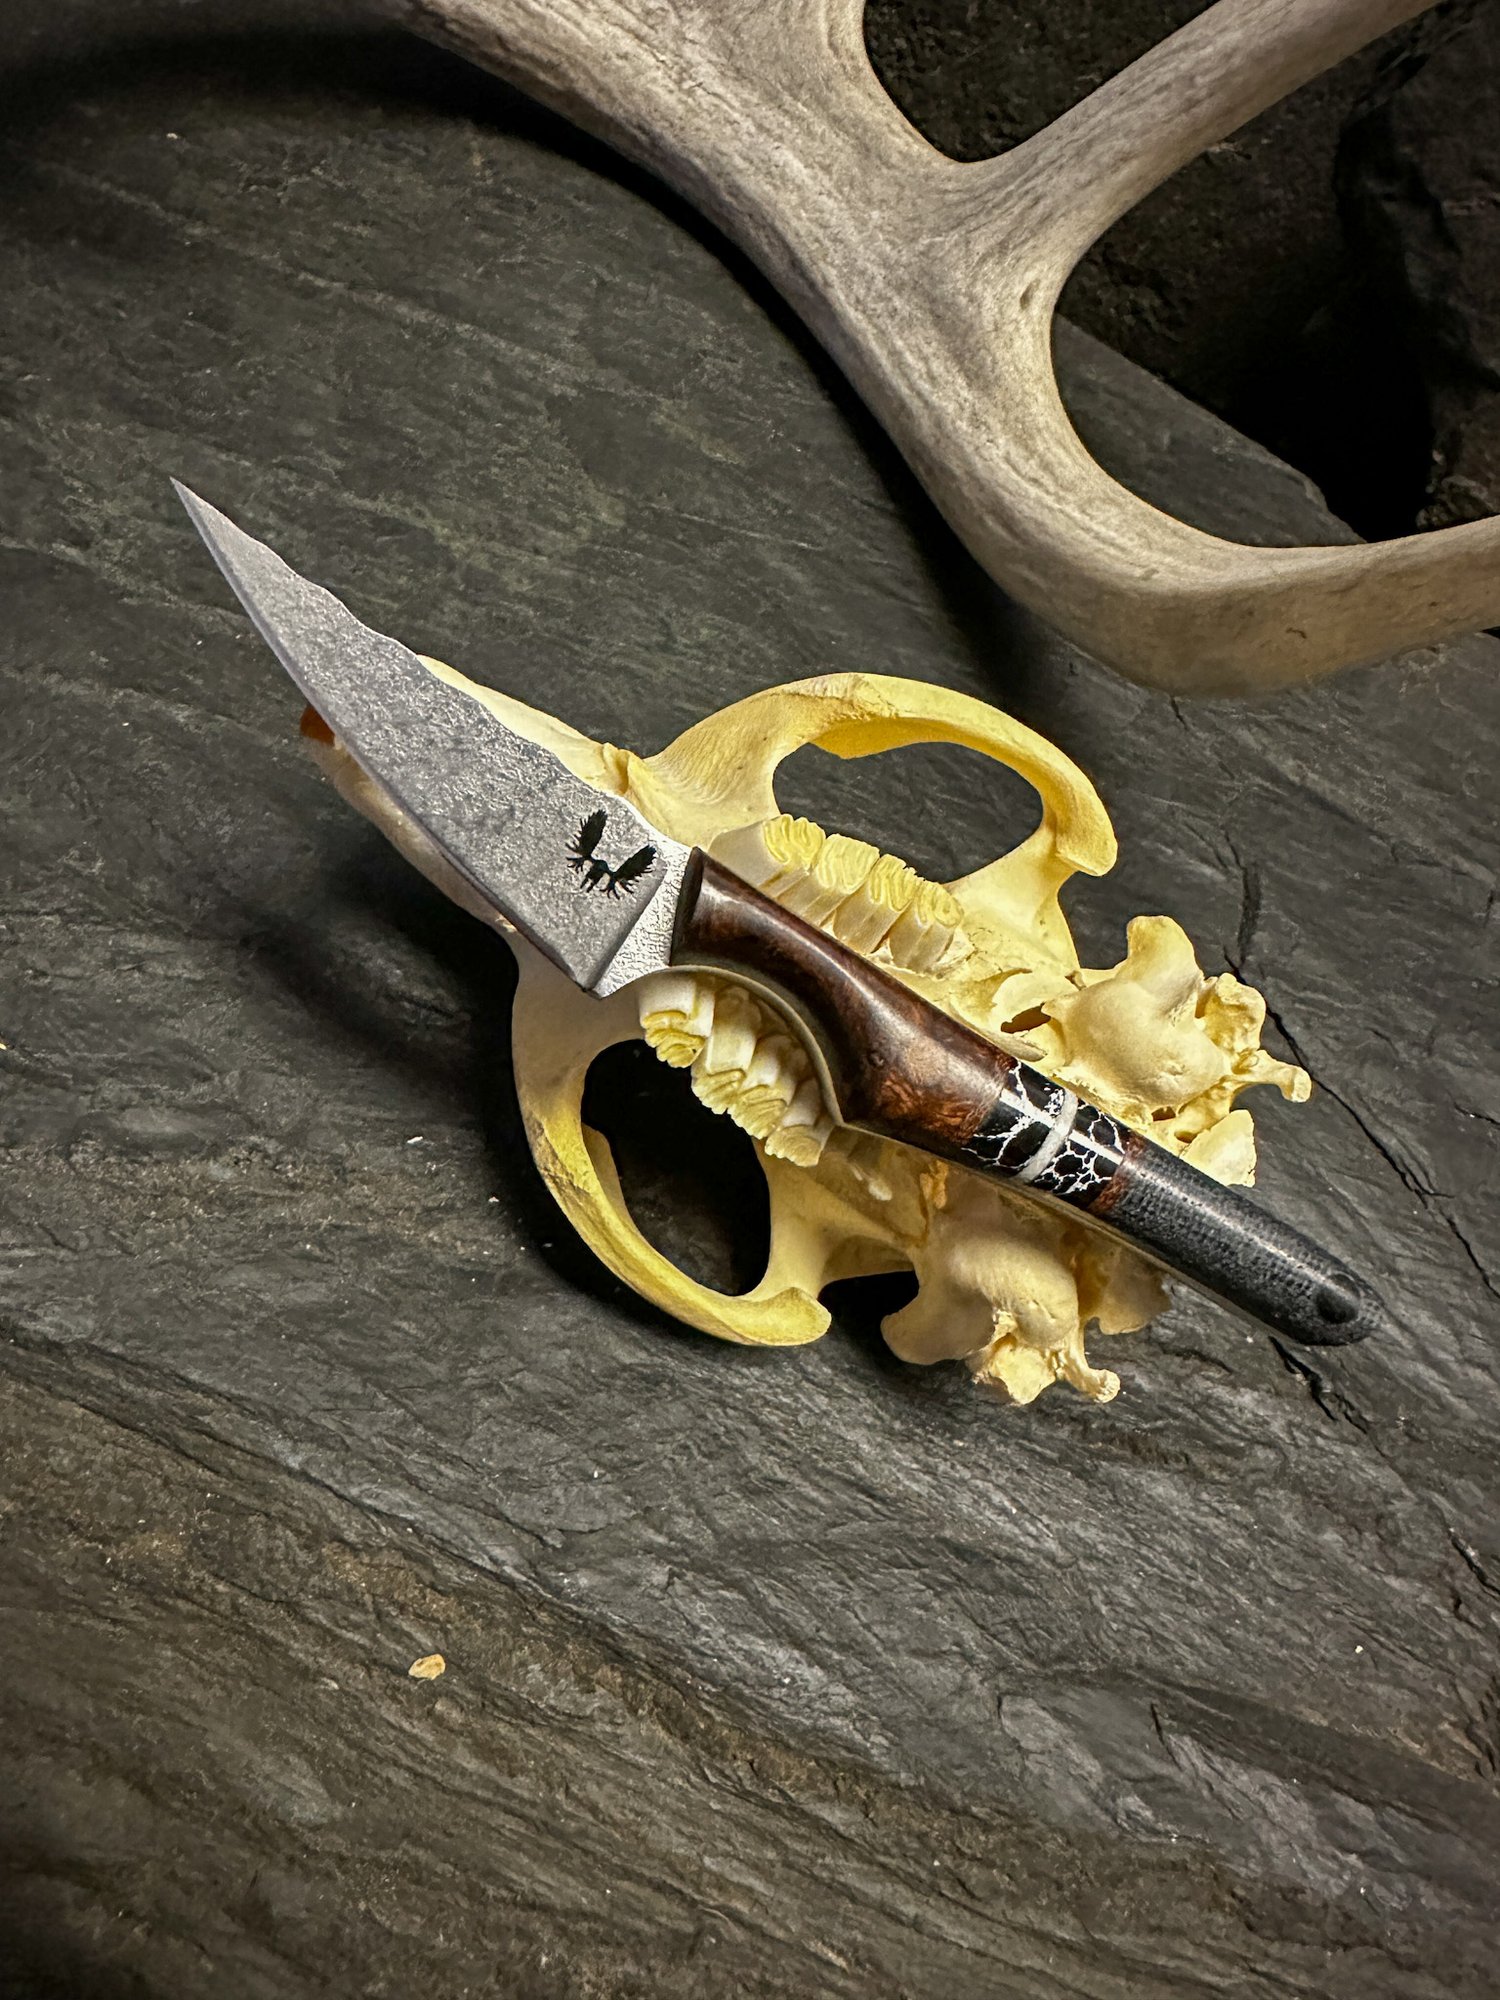 Field Co. No.16 Double-Handled Cast Iron Skillet - Bear Claw Knife & Shear